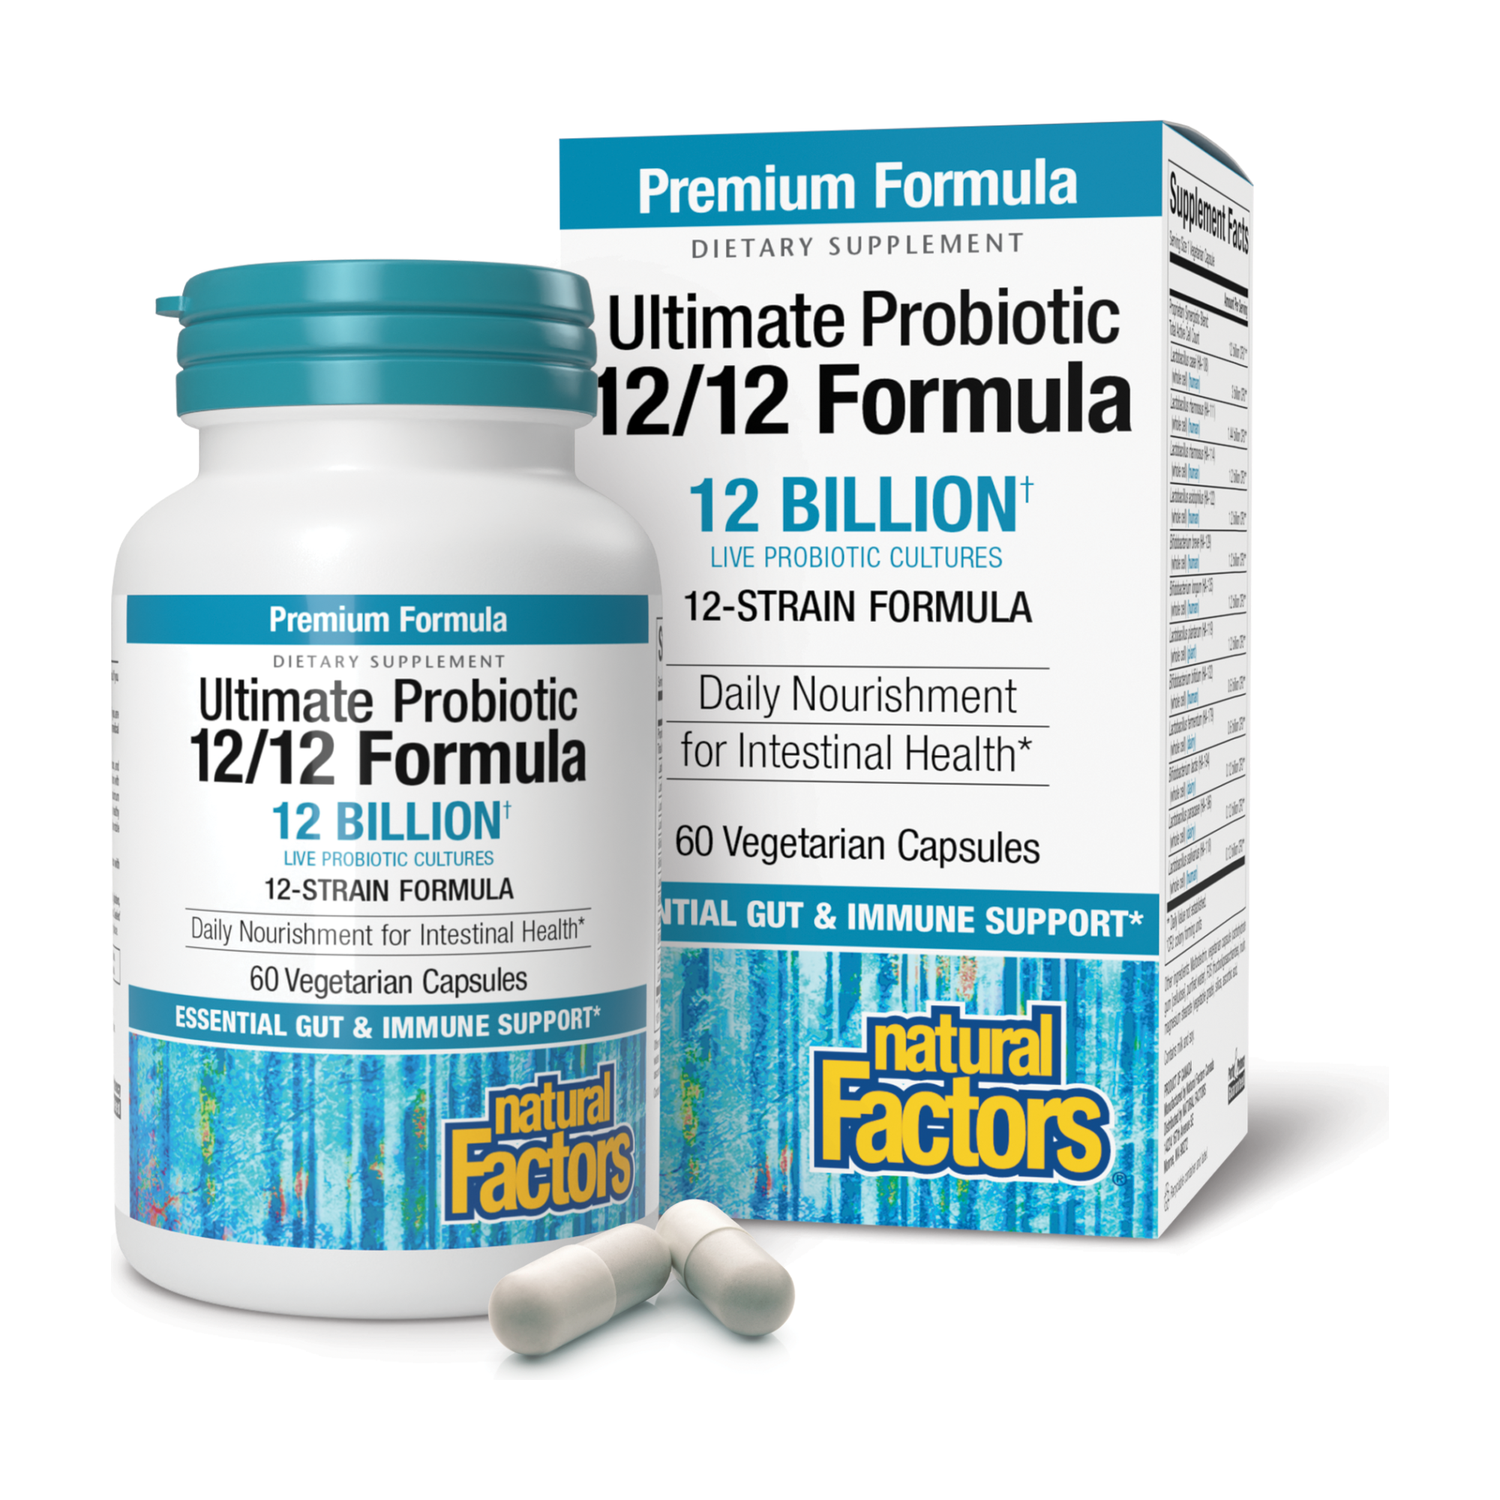 Ultimate Probiotic 12/12 Formula for Natural Factors |variant|hi-res|1847U